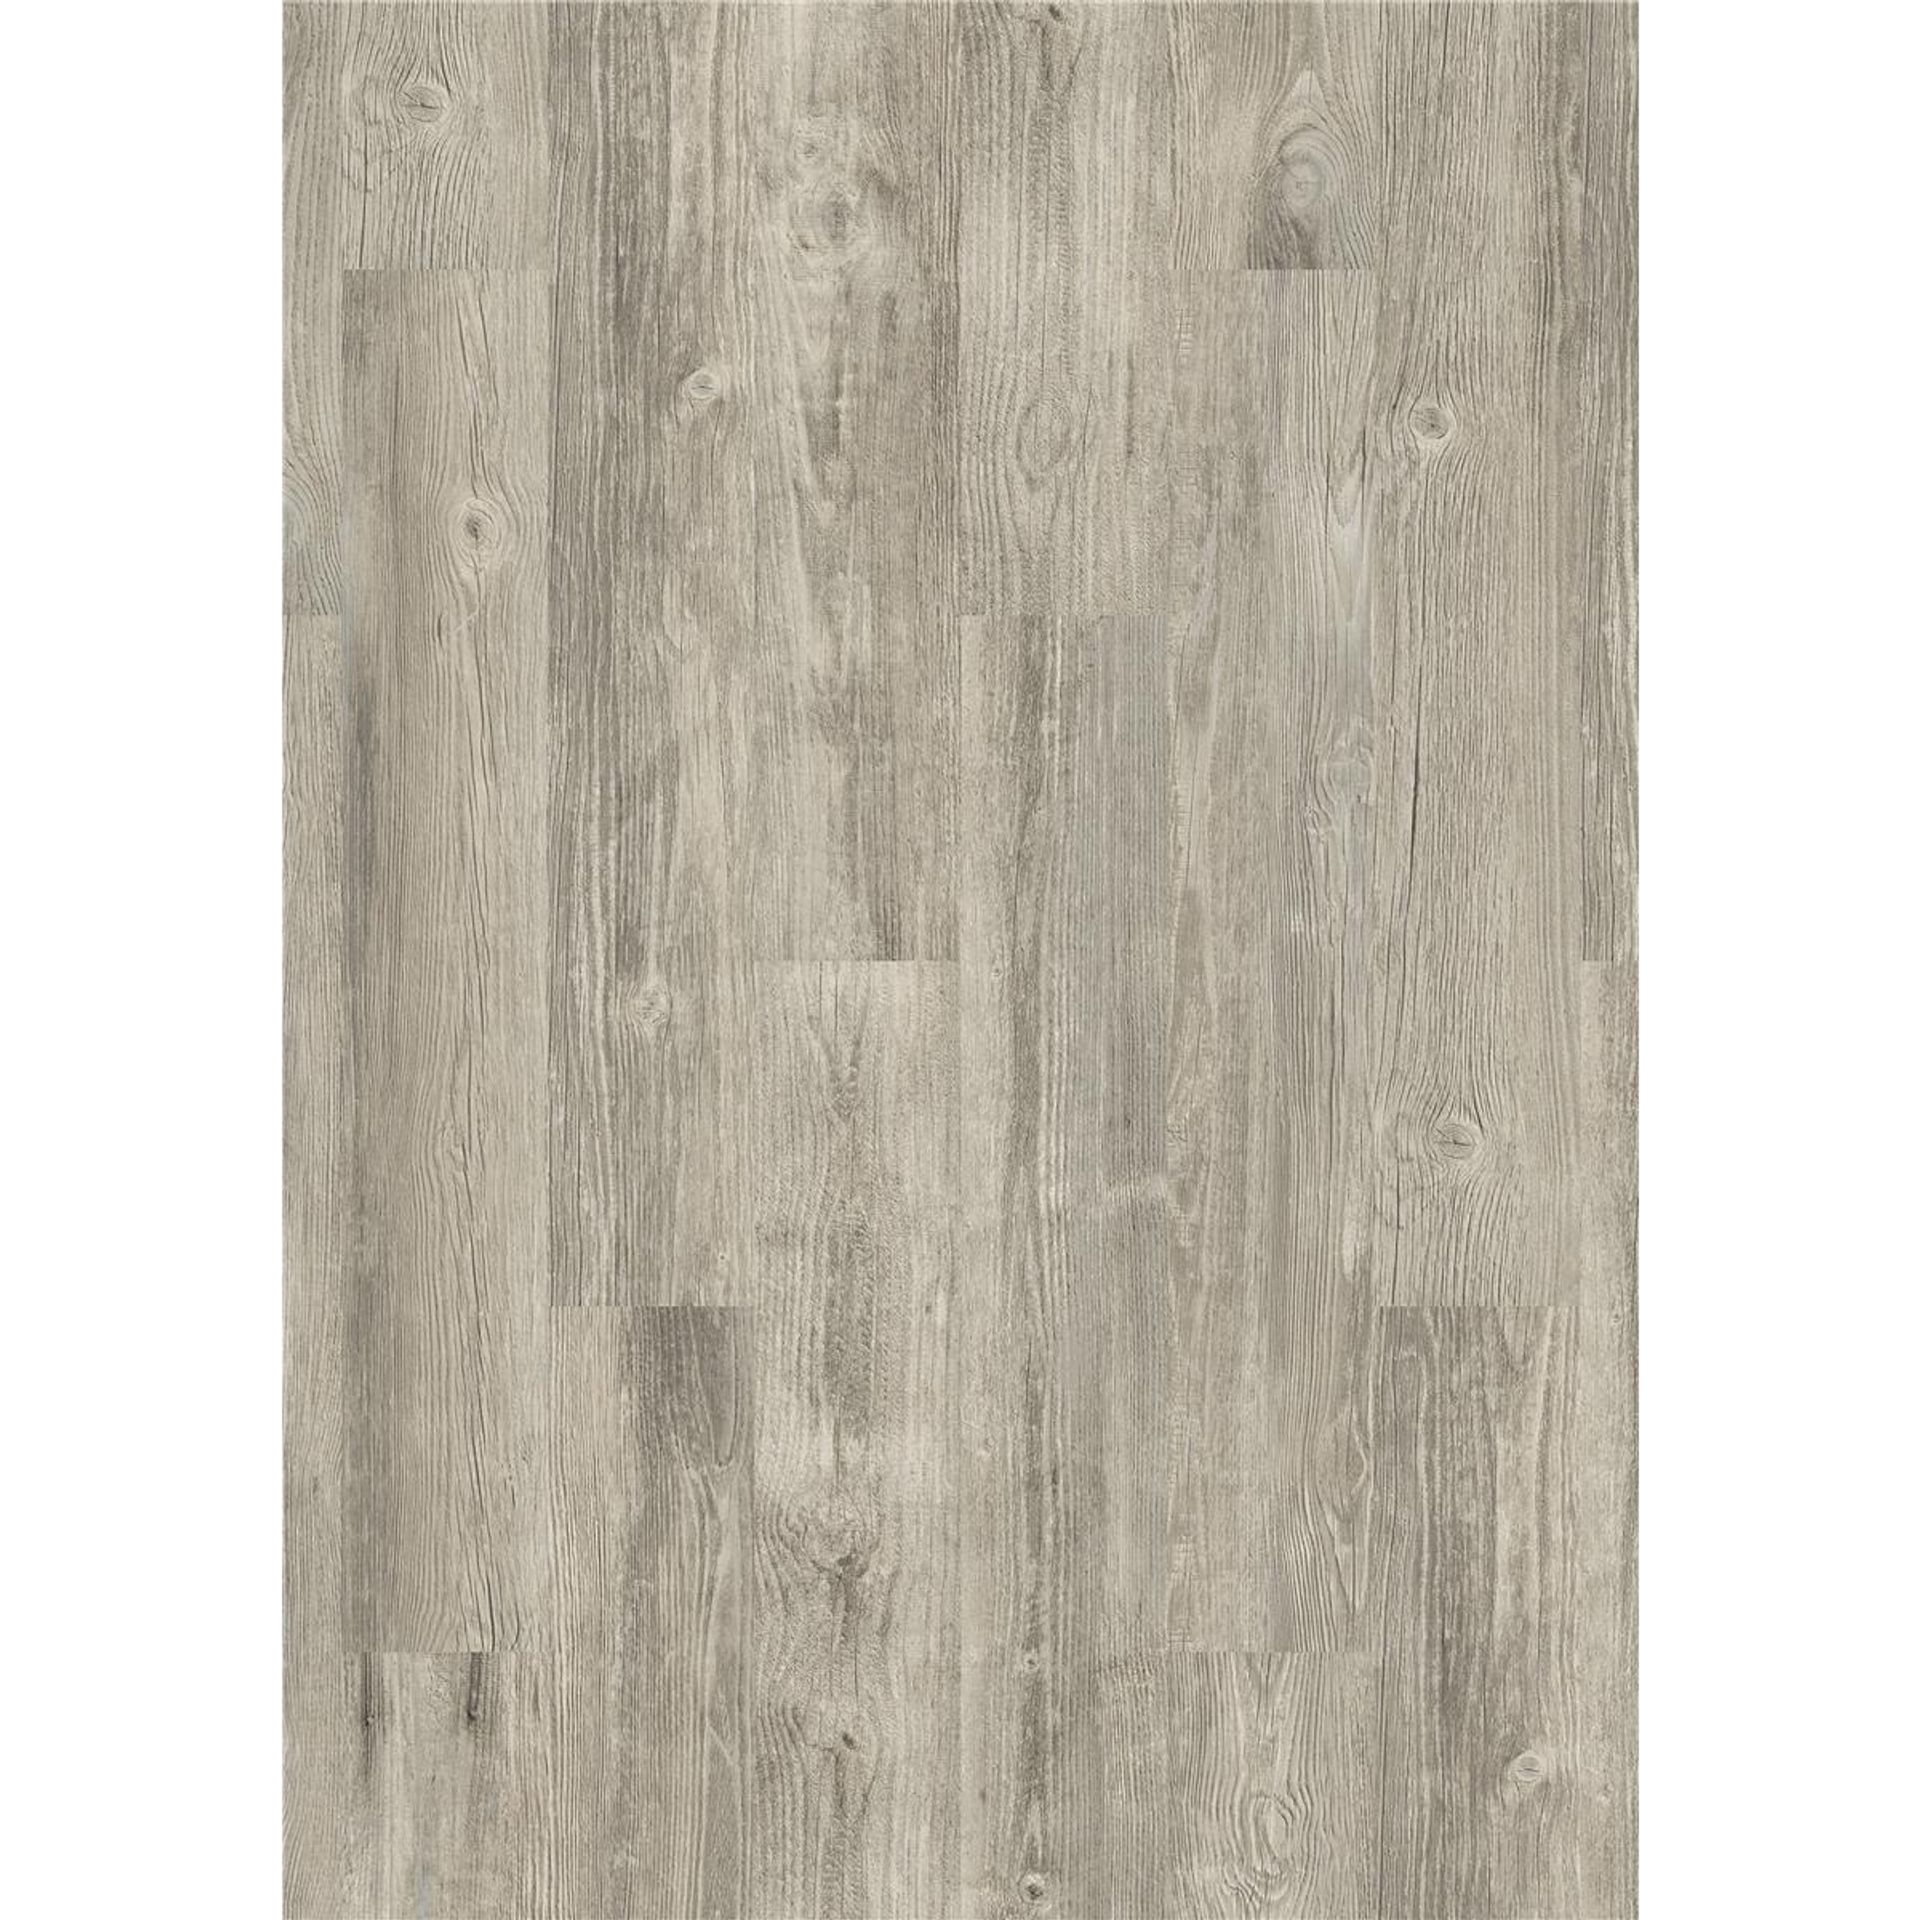 Laminat Planke 19,2 cm x 128,5 cm Klassik 1-Stab AS Pine vintage - 7 mm Stärke